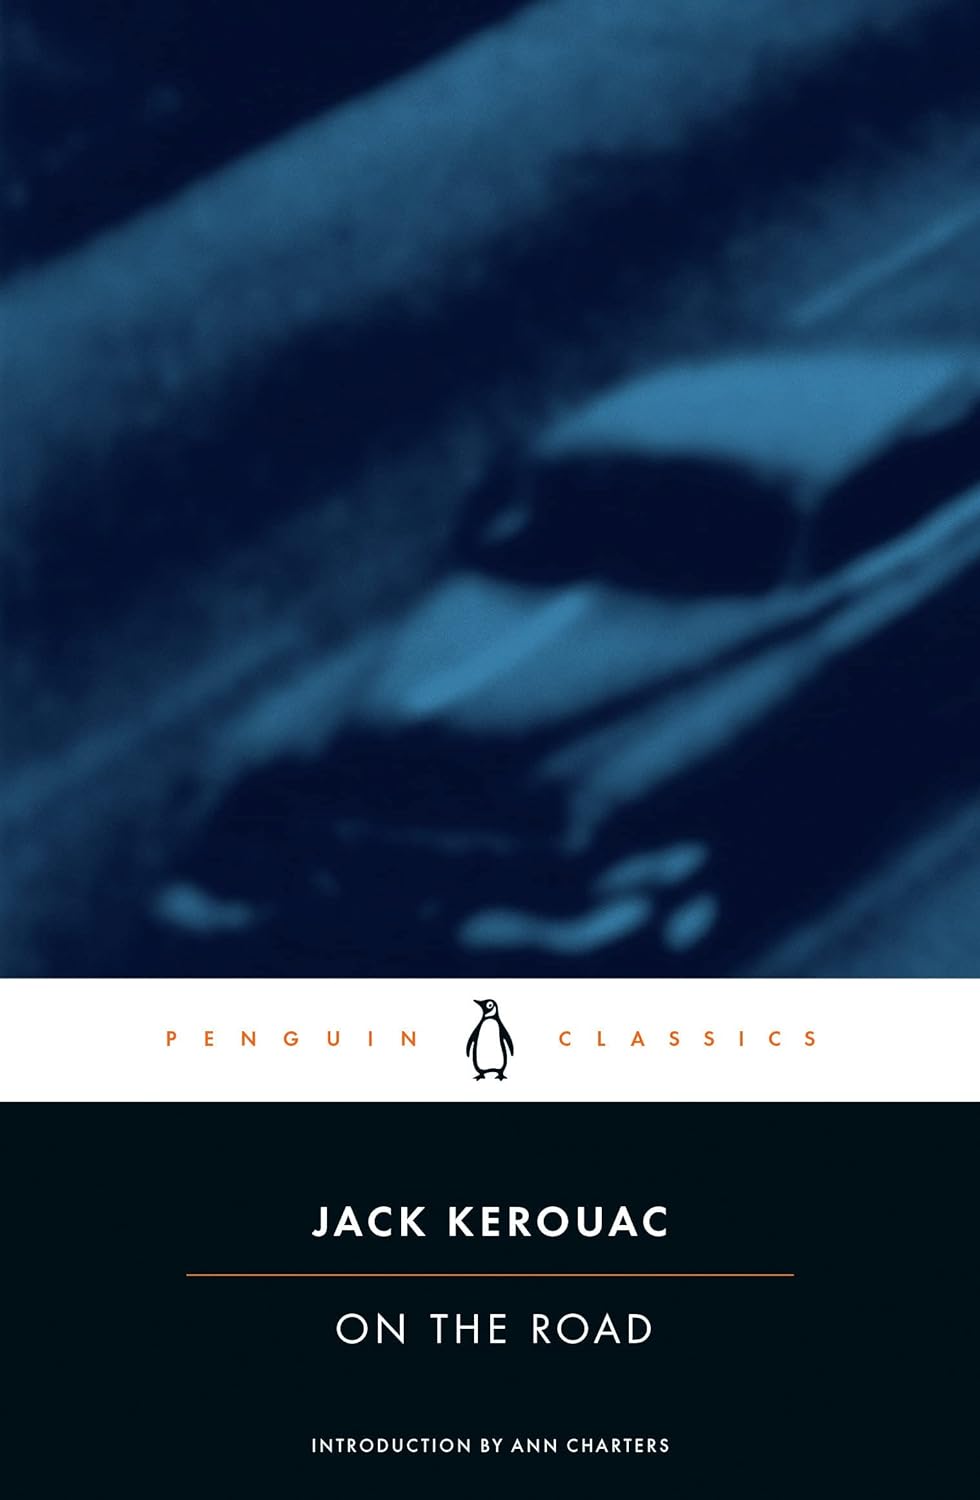 books about jack kerouac